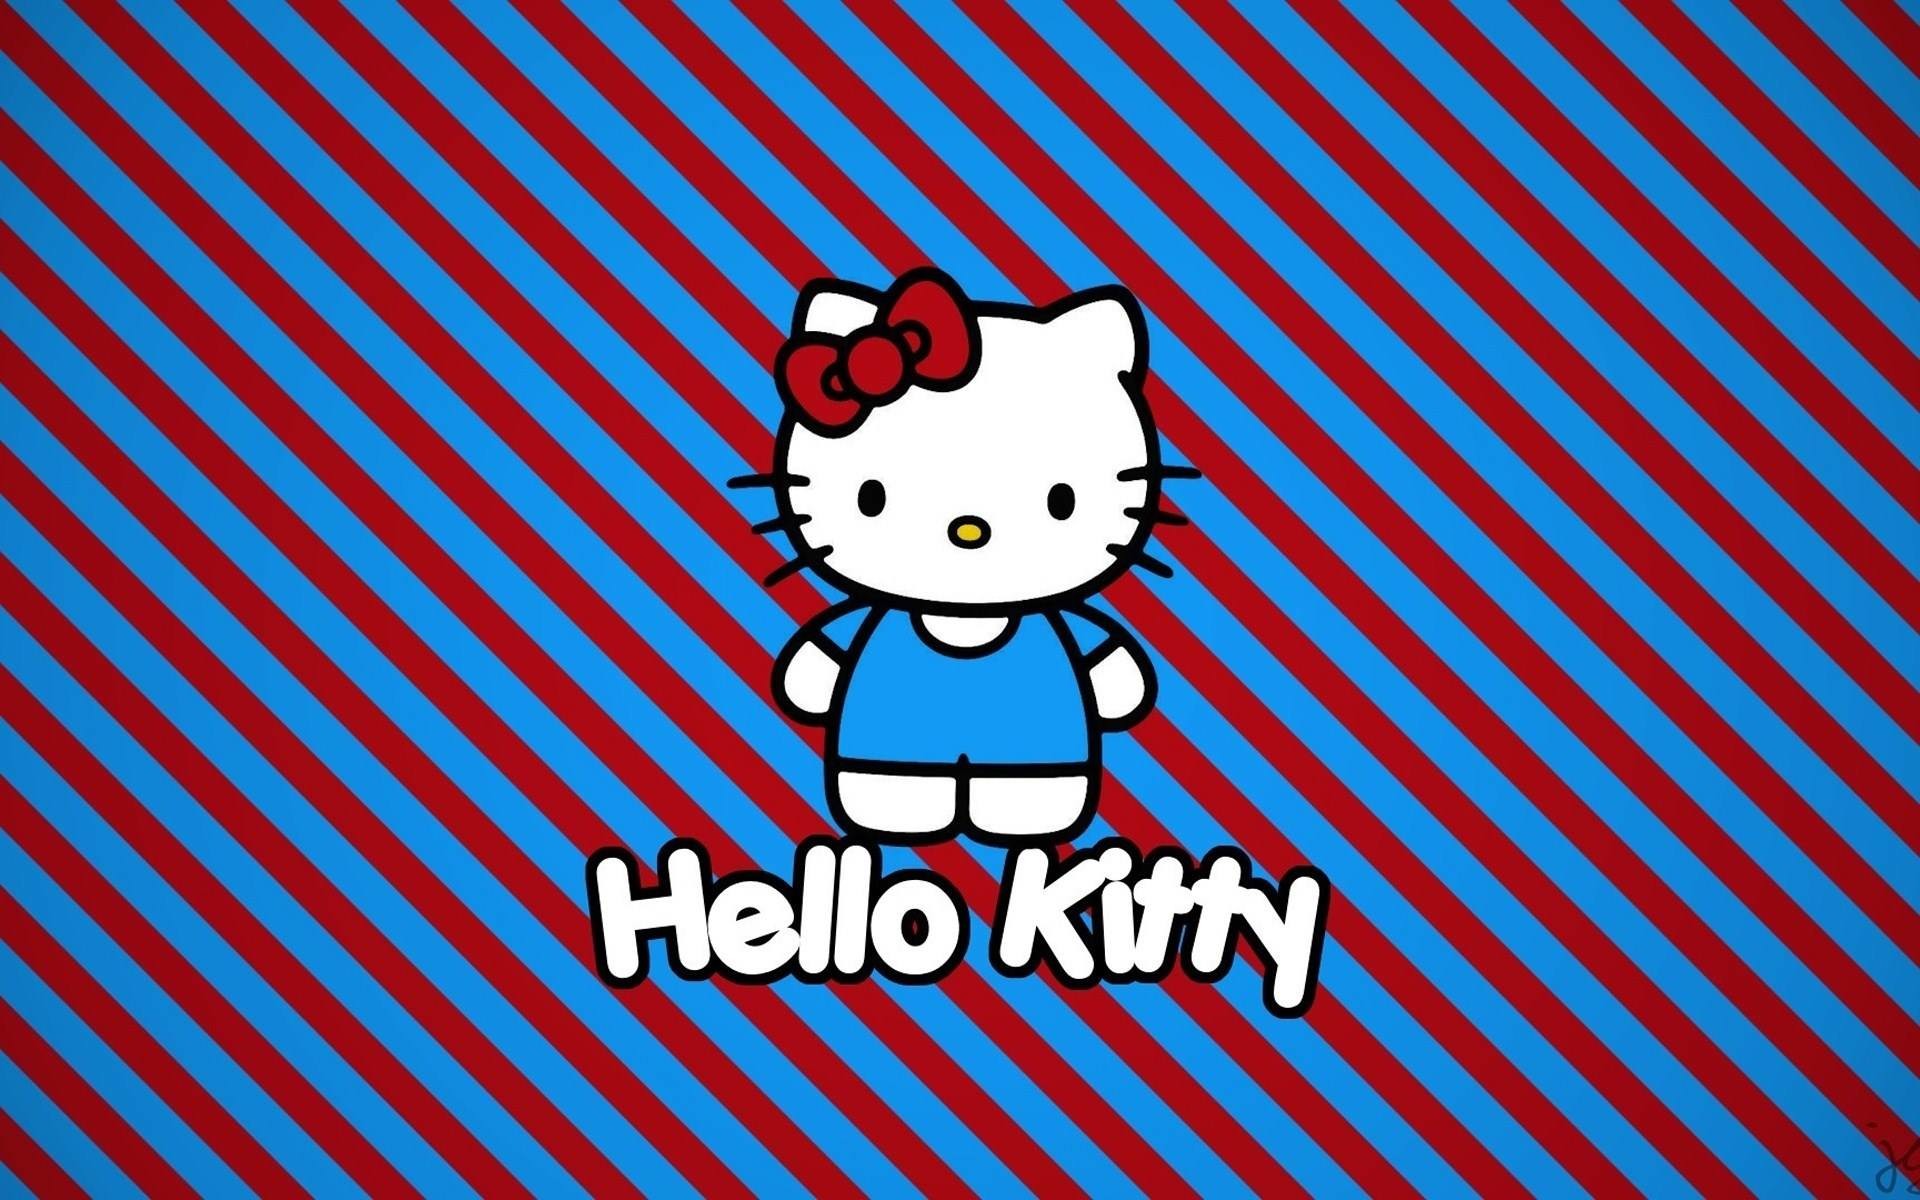 Merry Christmas   Hello kitty wallpaper Hello kitty wallpaper hd Hello  kitty